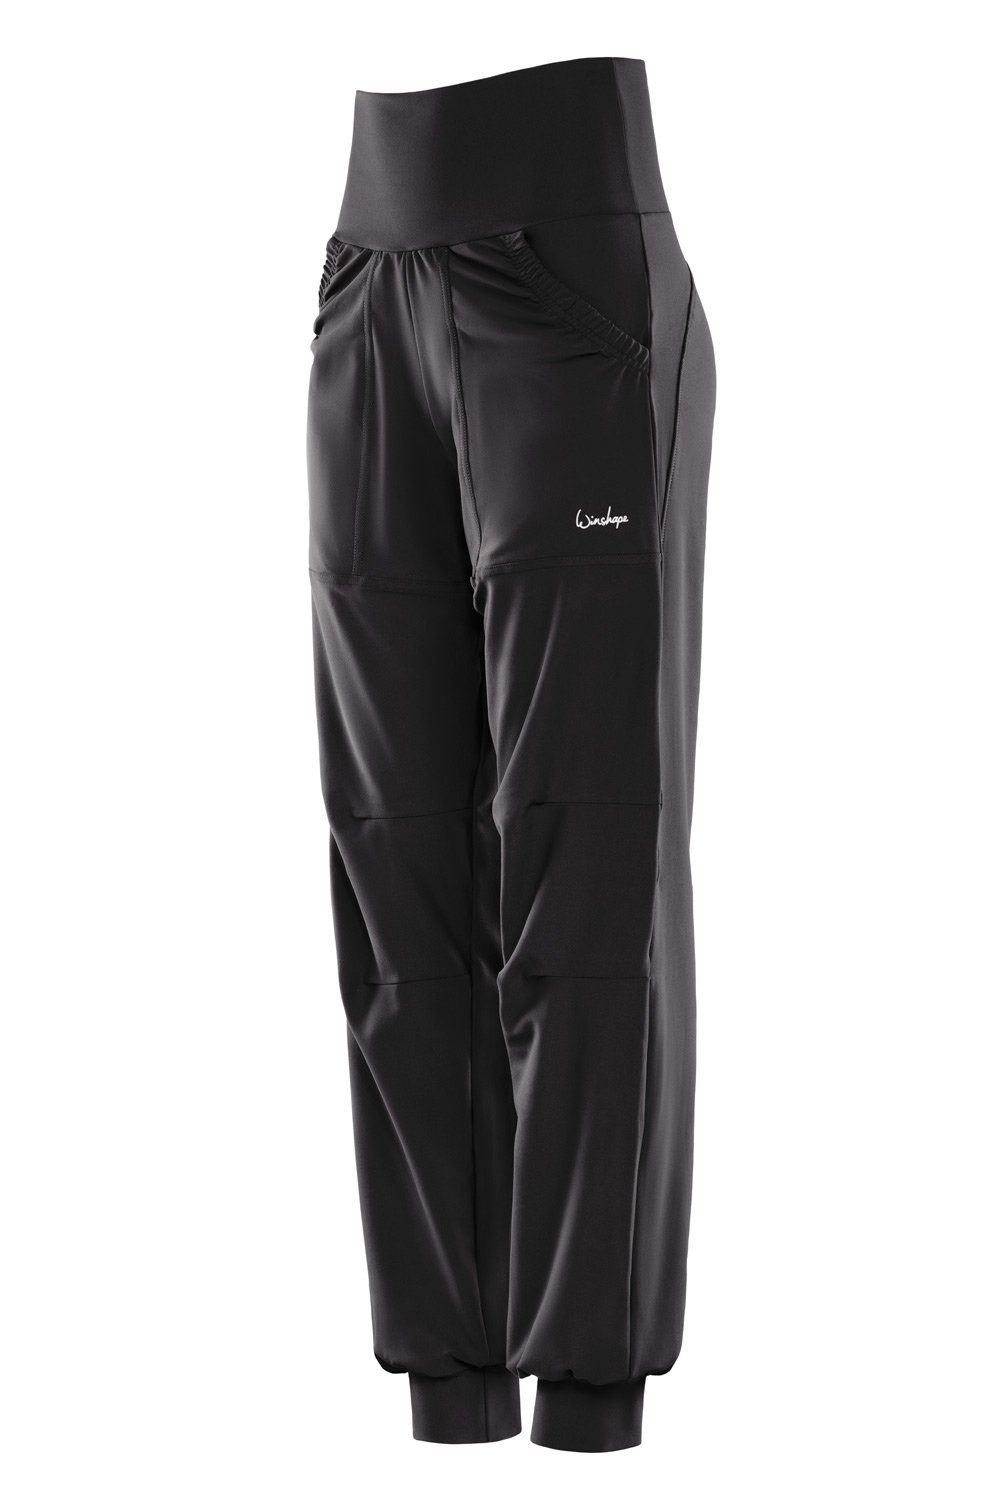 Winshape Sporthose LEI101C Comfort High Waist schwarz Functional Time Trousers Leisure